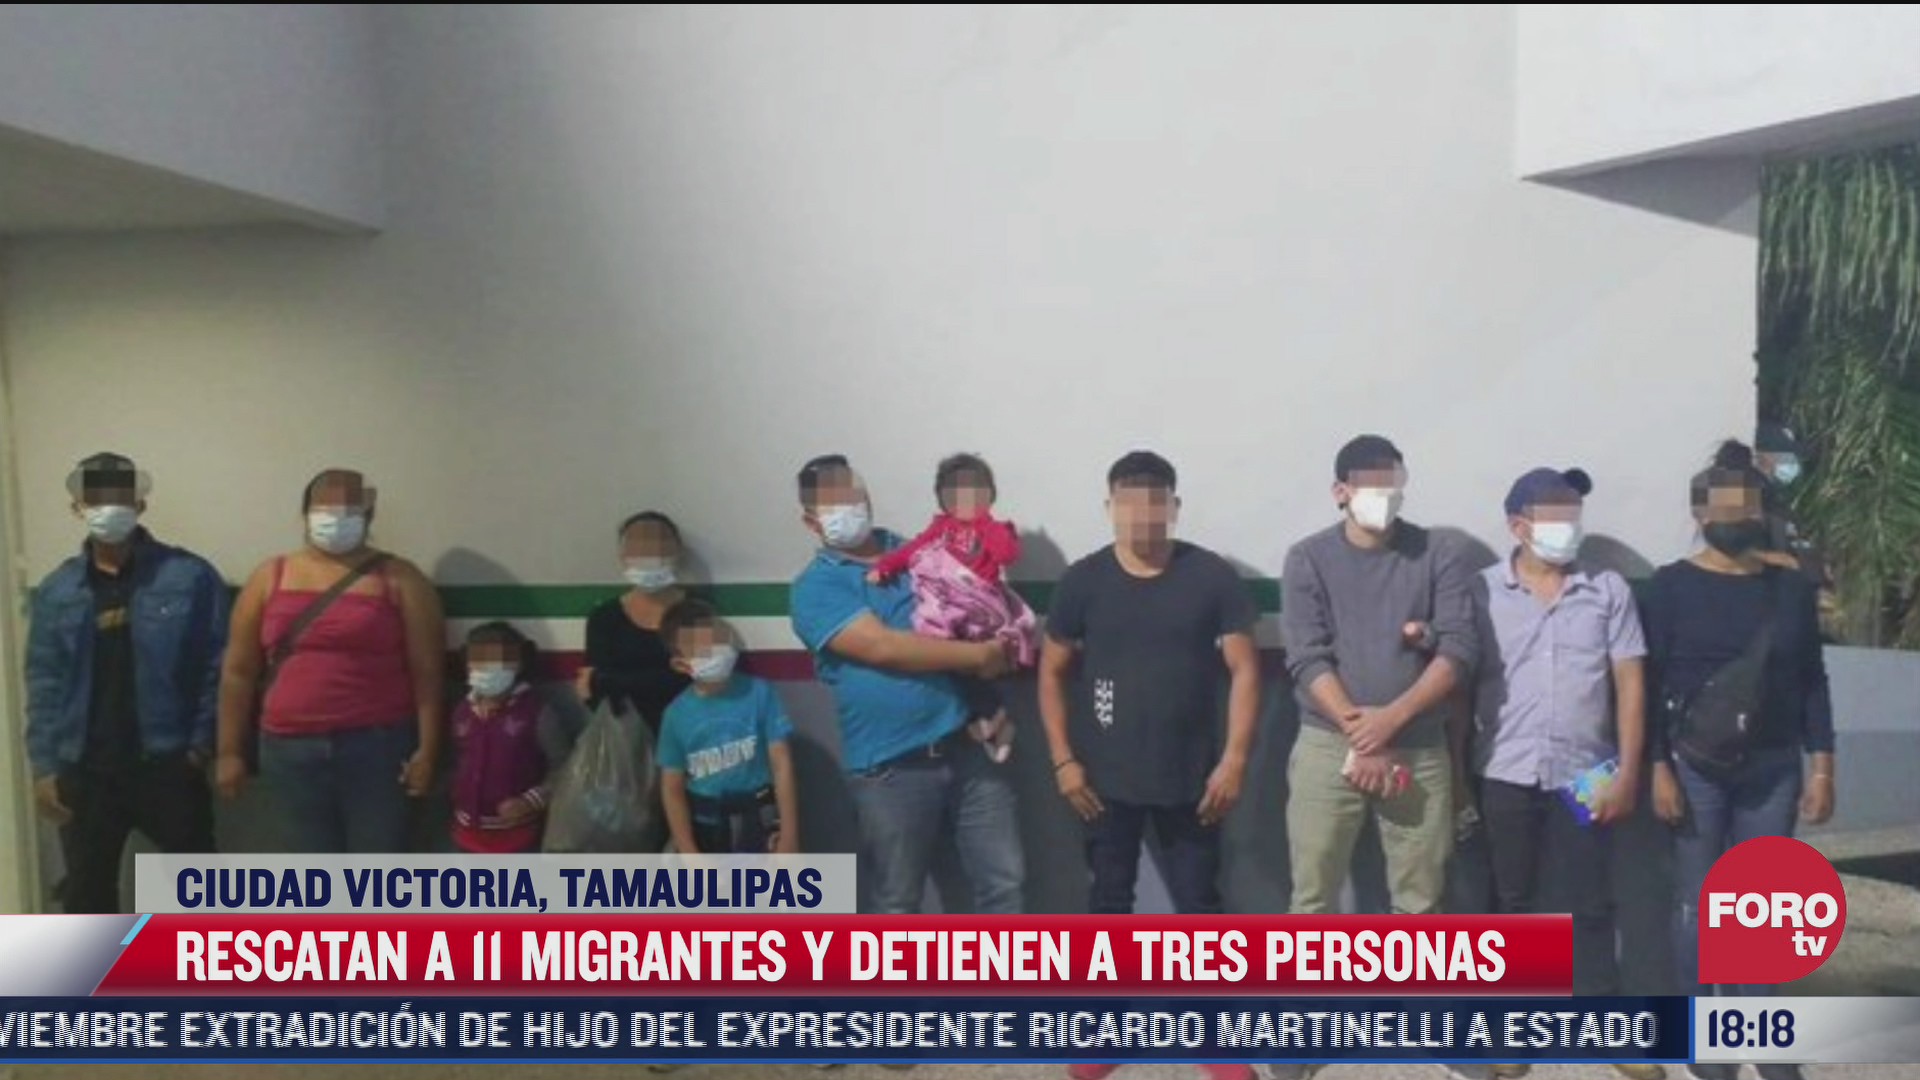 policias de tamaulipas rescatan a migrantes hondurenos